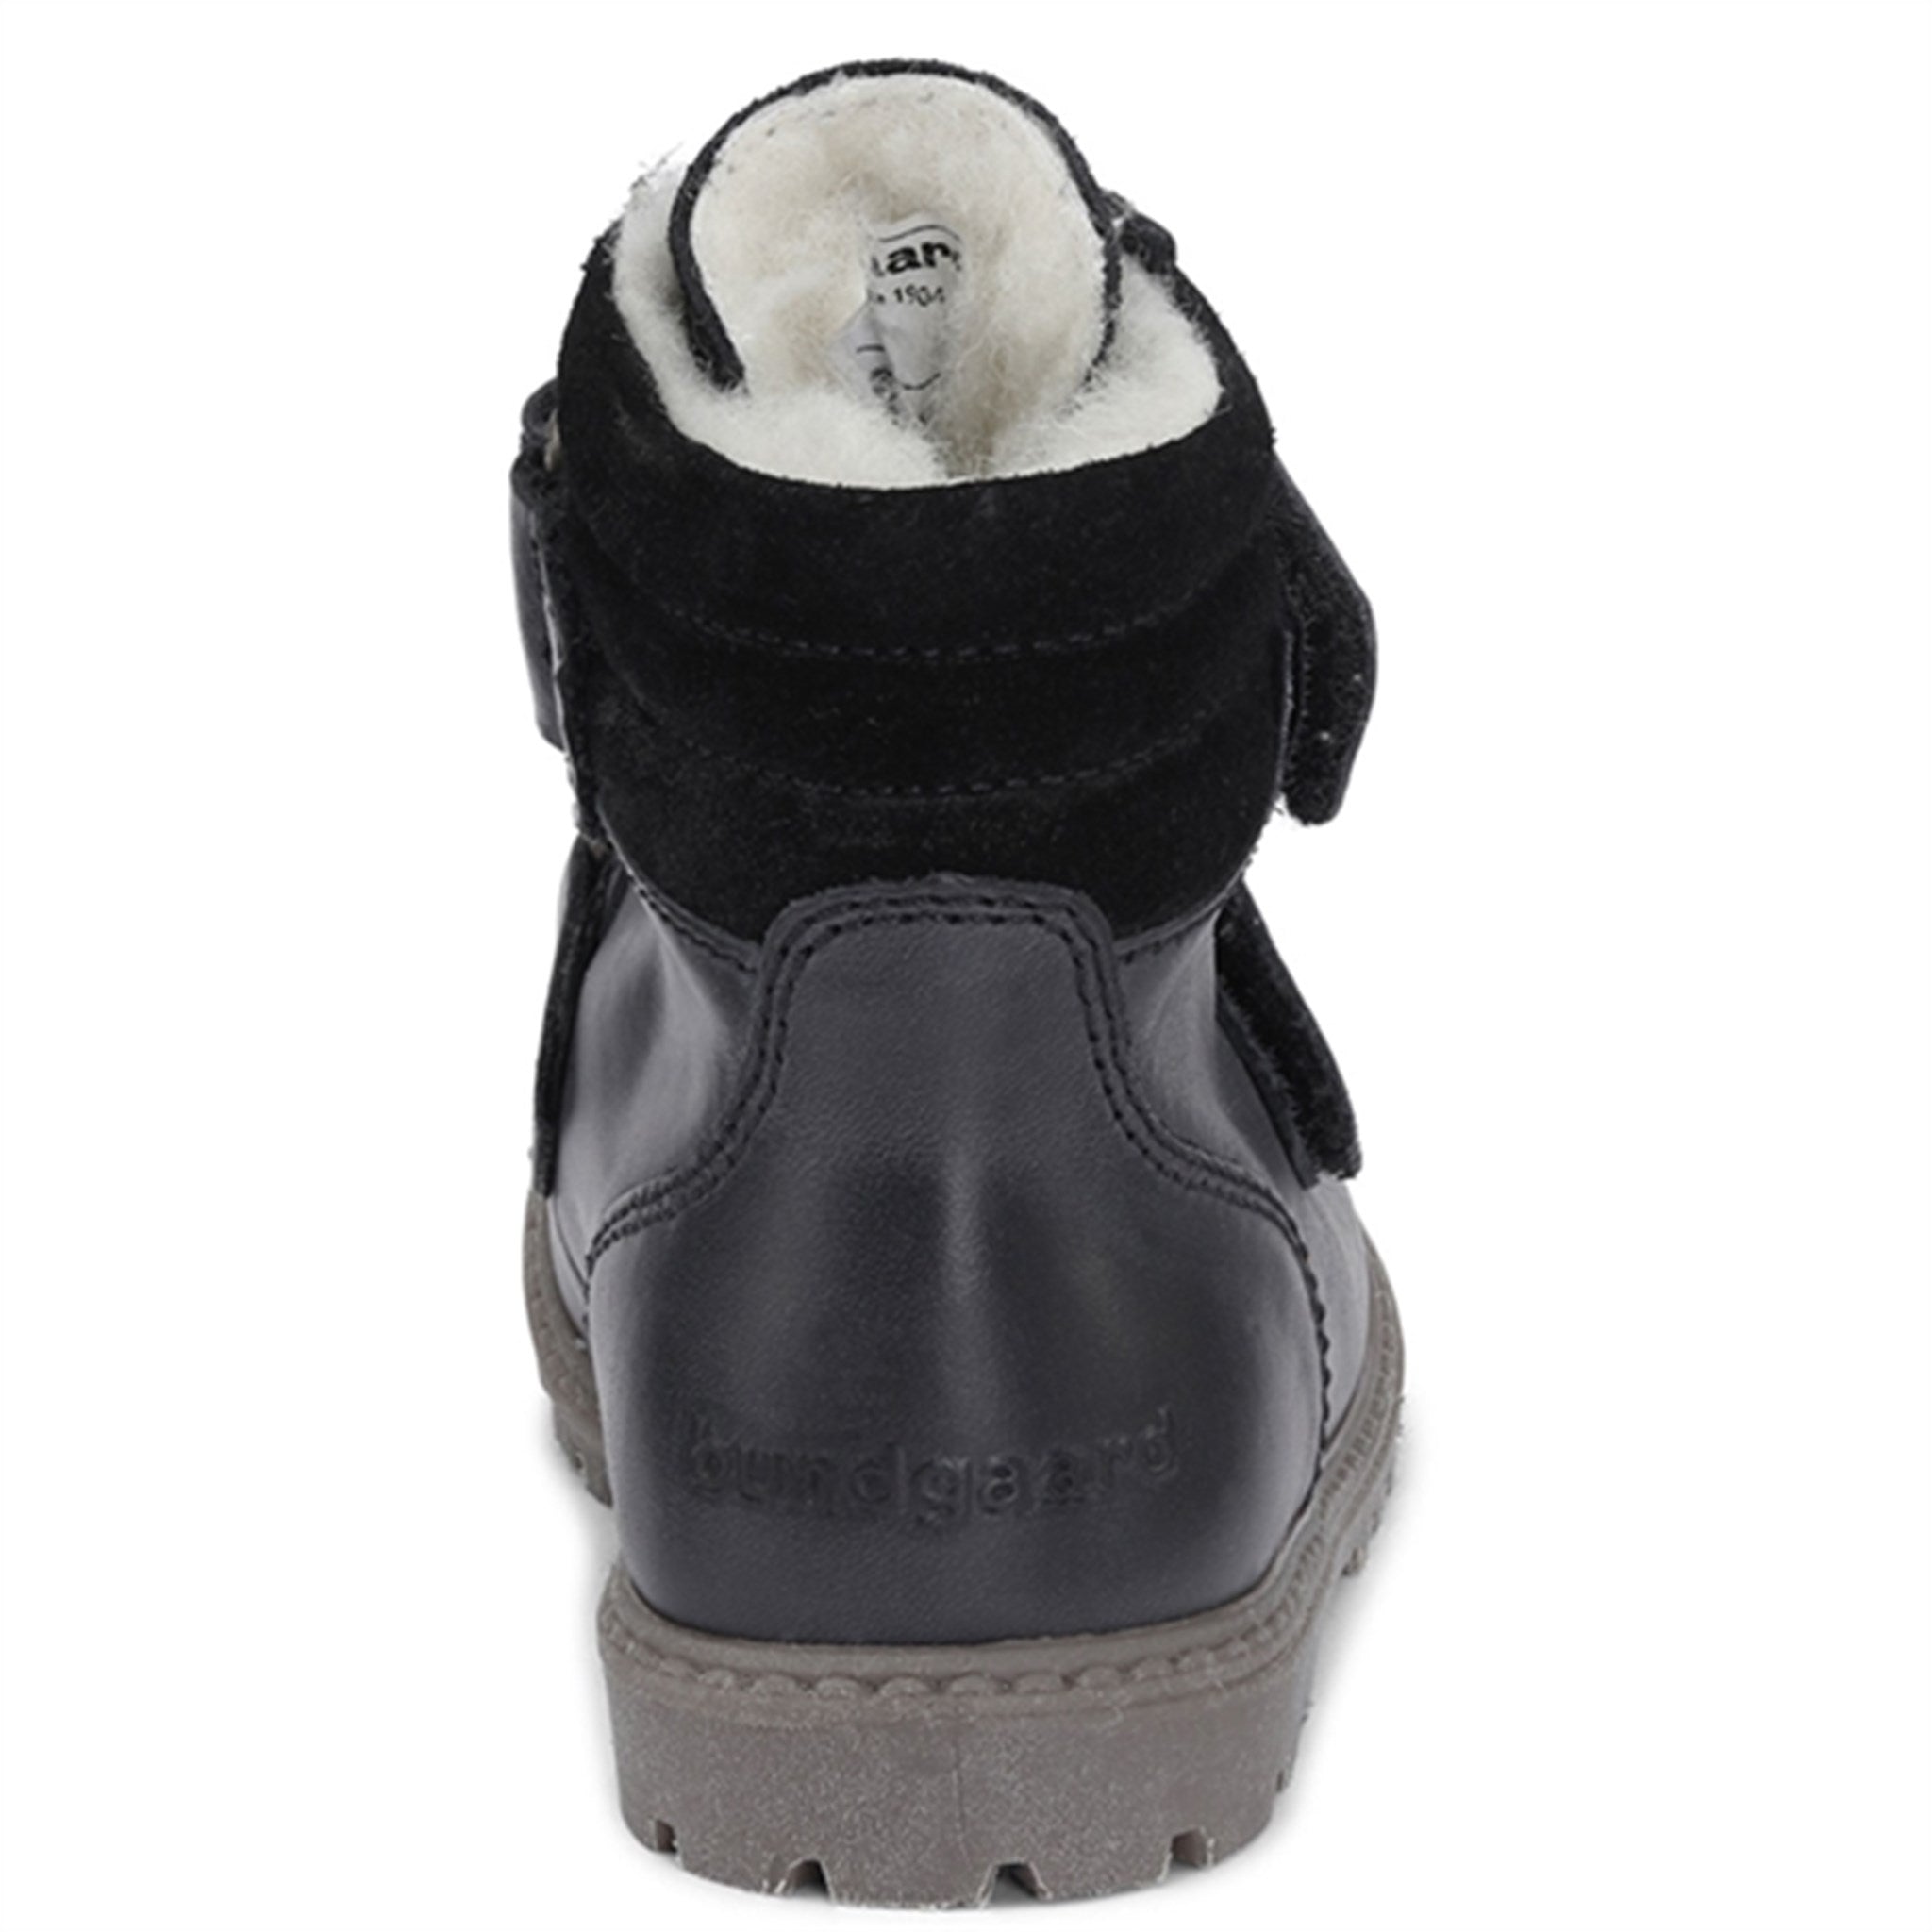 Bundgaard Tokker TEX Winter Boots Black WS 3